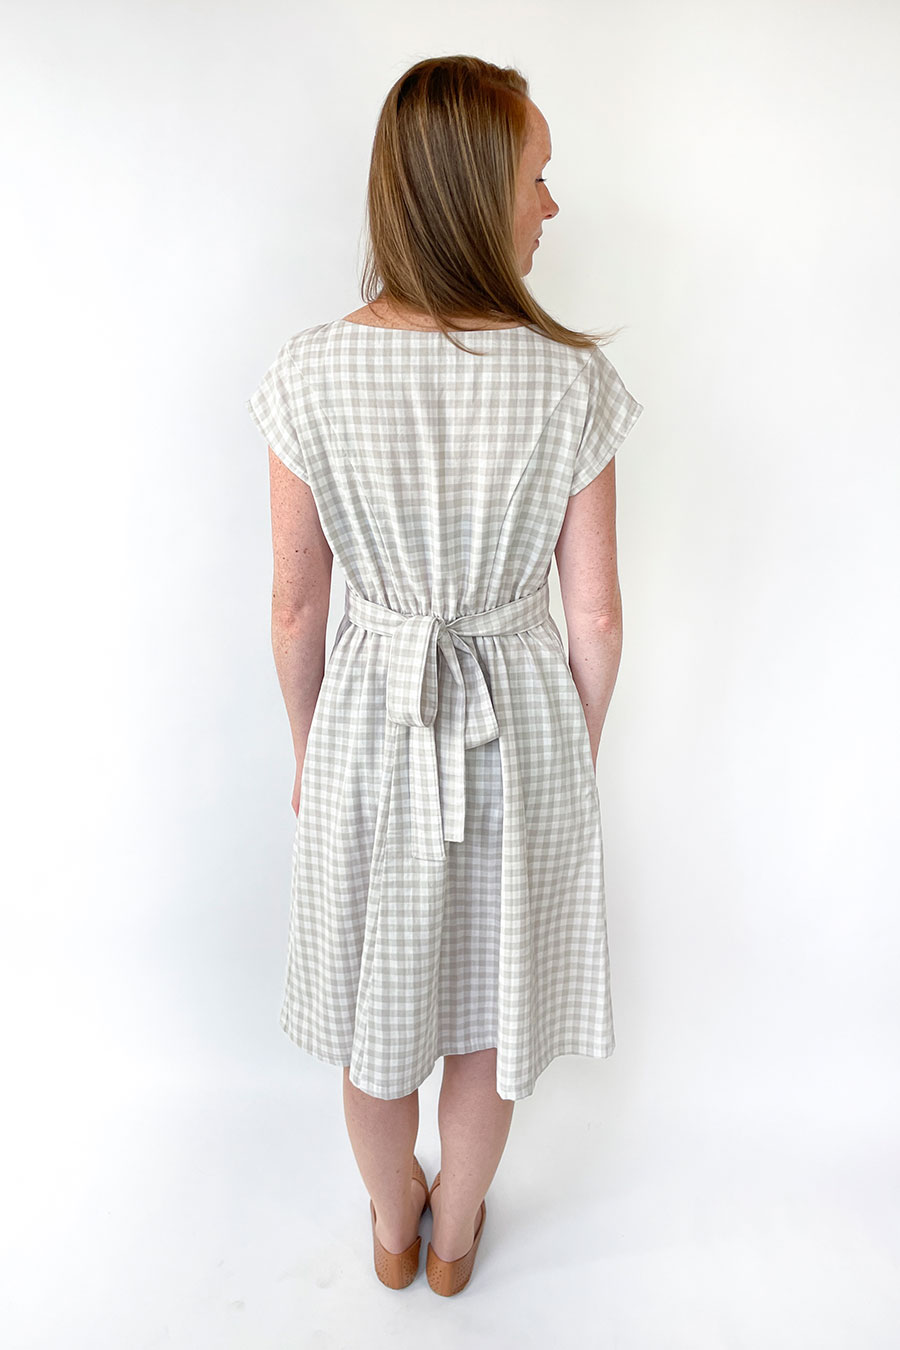 Jennifer Lauren Handmade Kinfolk Dress